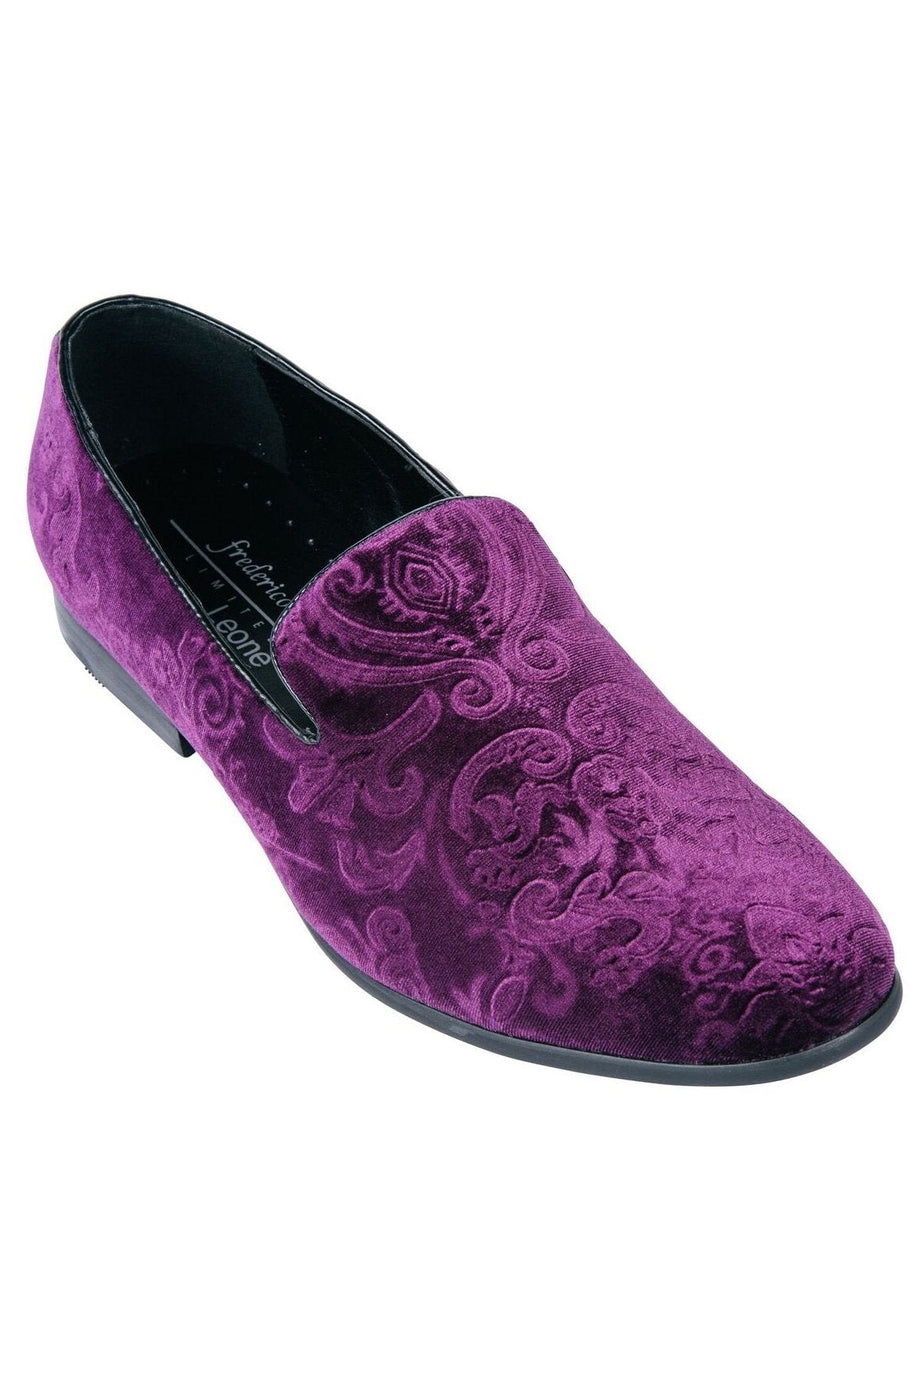 Frederico Leone "Marcel" Purple Velvet Frederico Leone Tuxedo Shoes